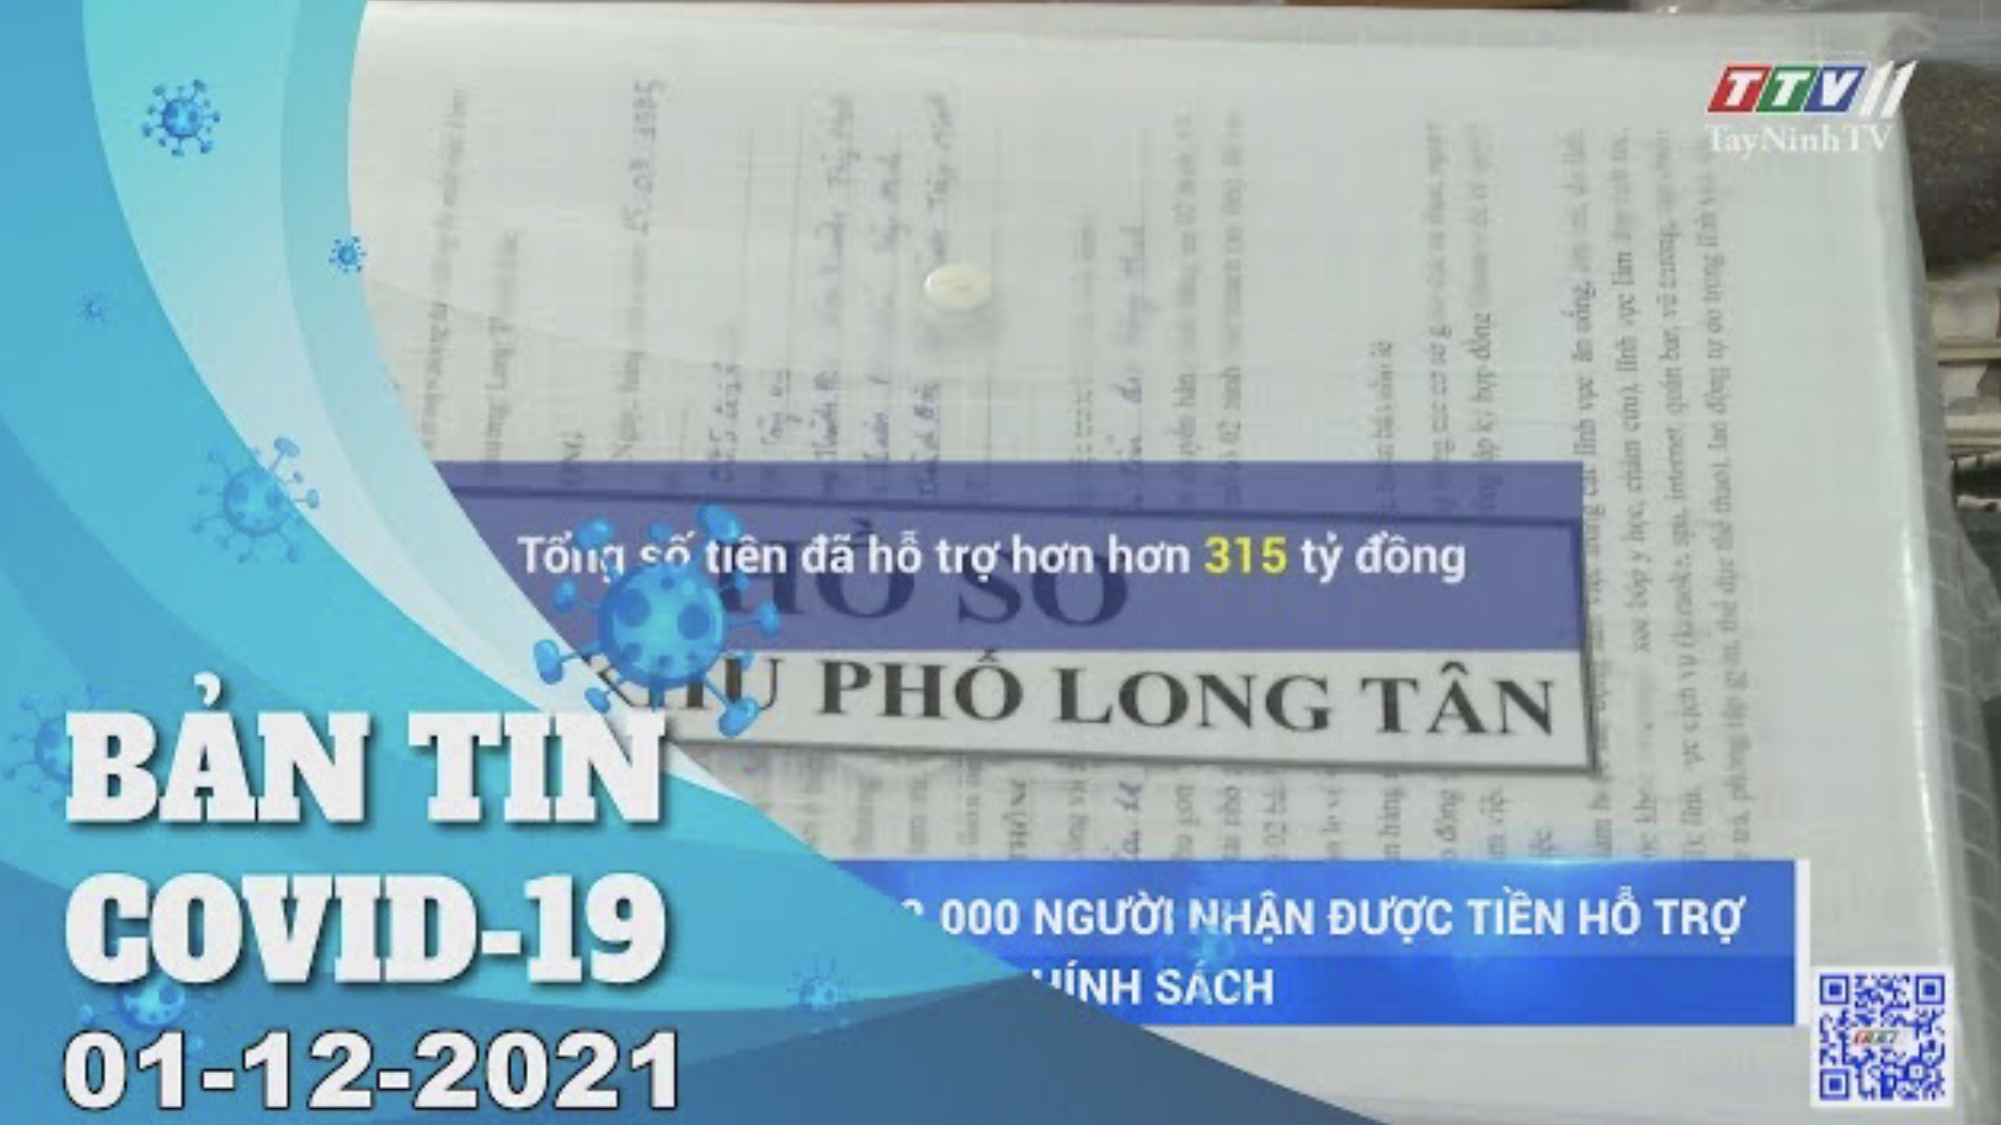 BẢN TIN COVID-19 01/12/2021 | Tin tức hôm nay | TayNinhTV